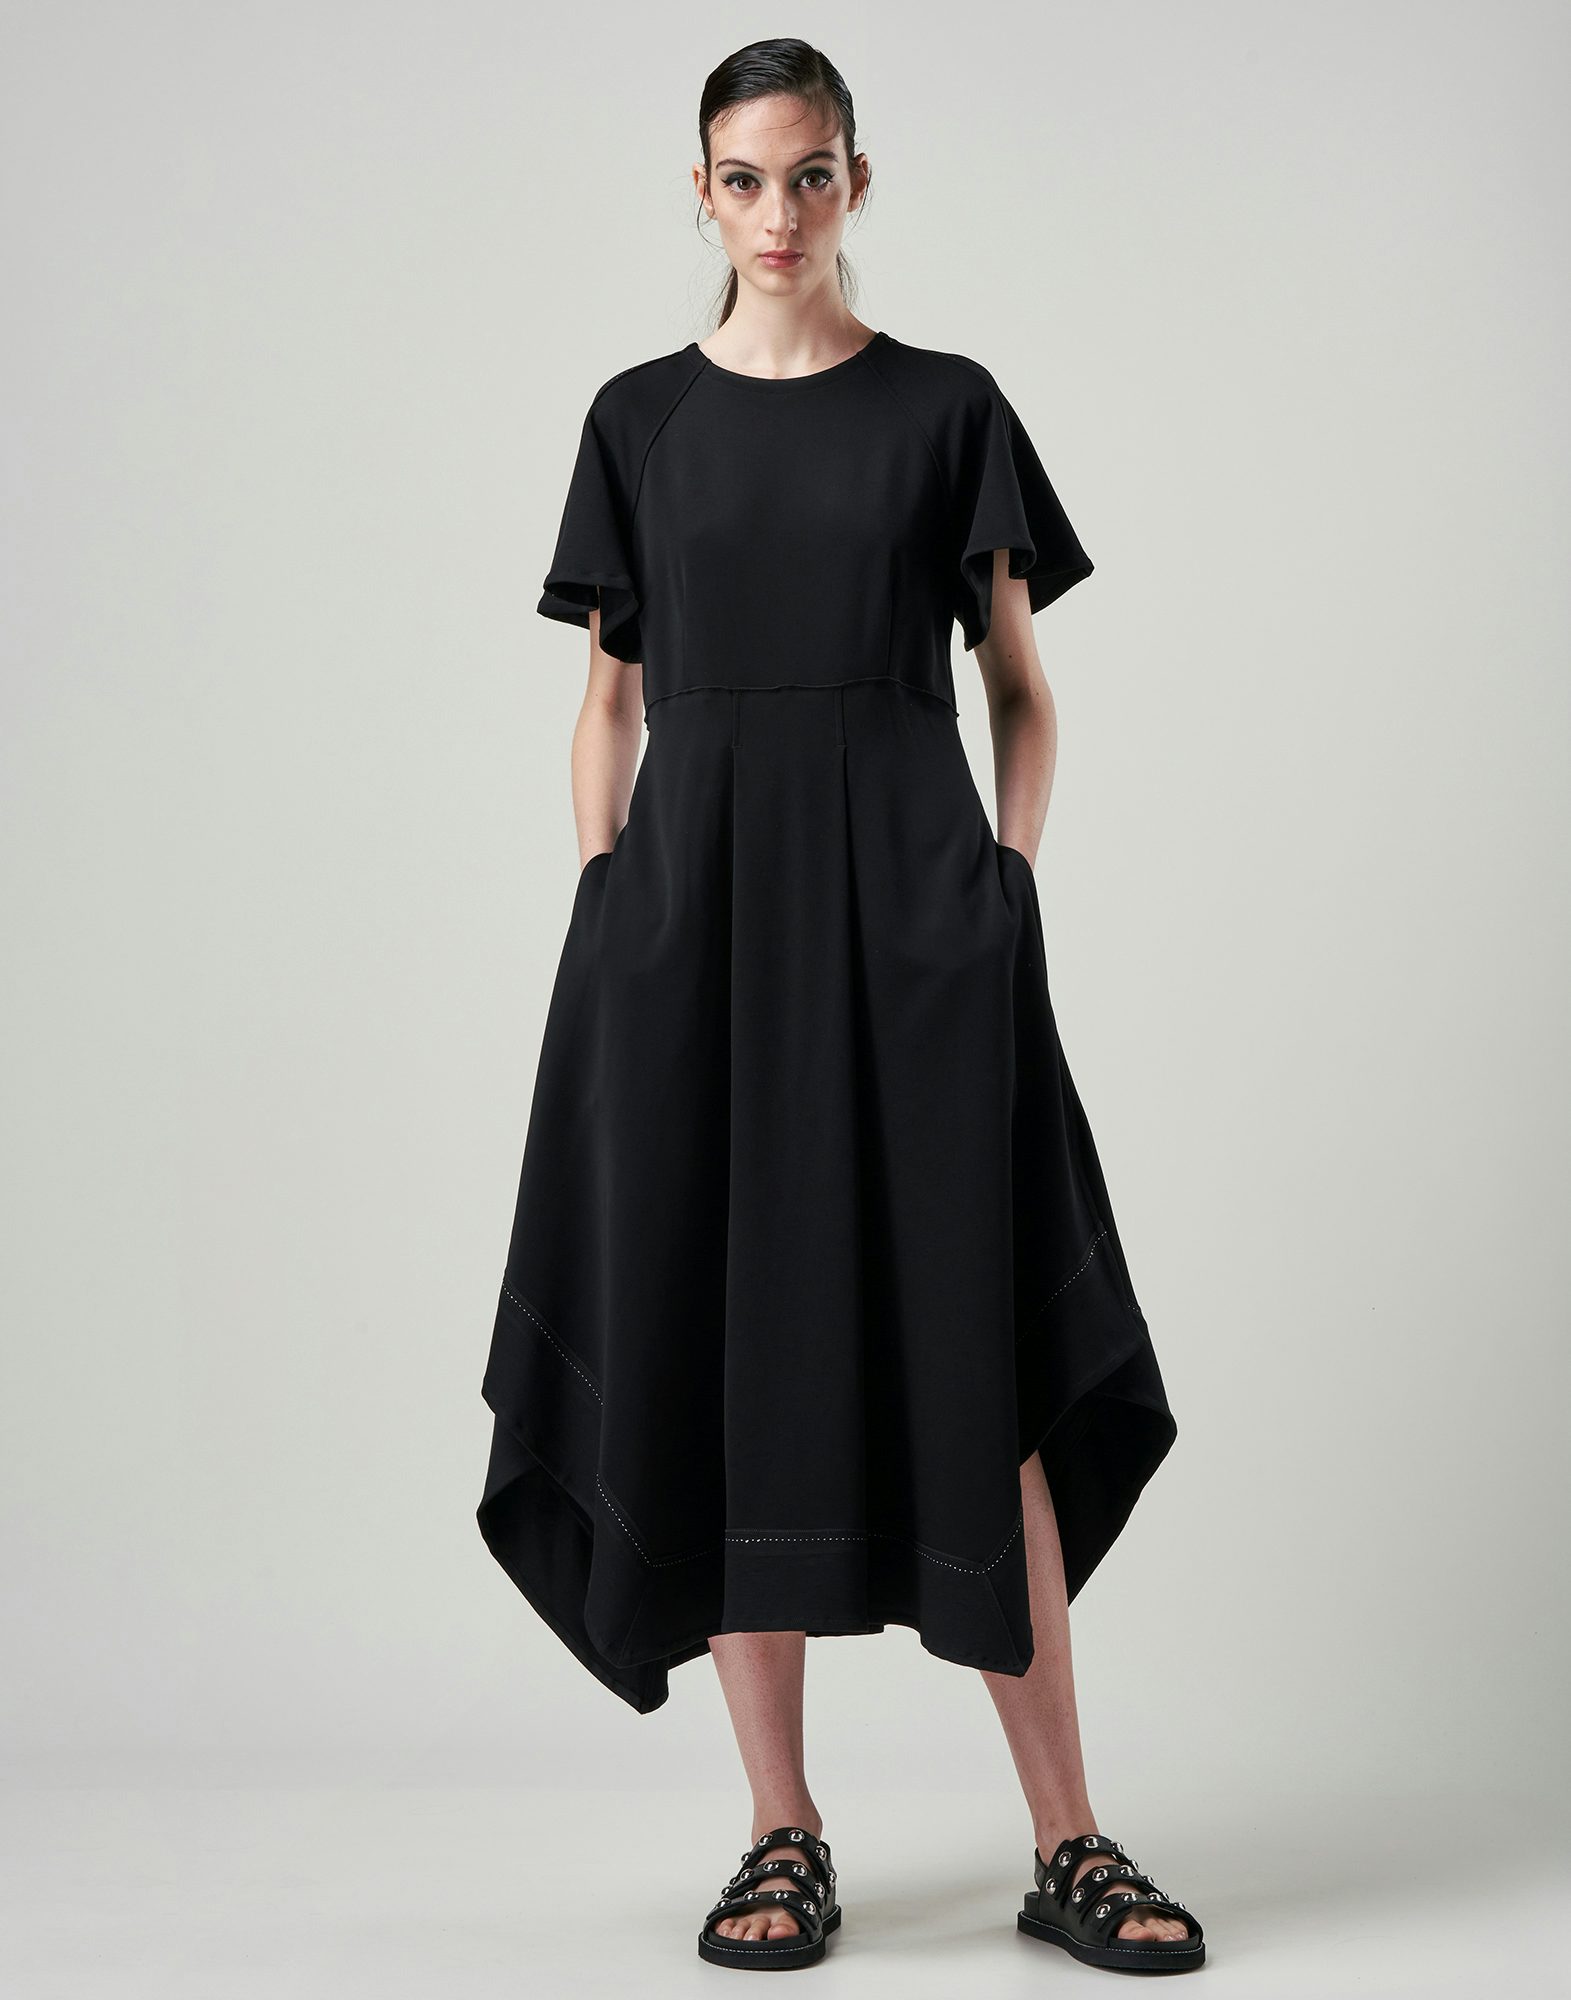 INSTINCT: dress Black a with skirt multi-point